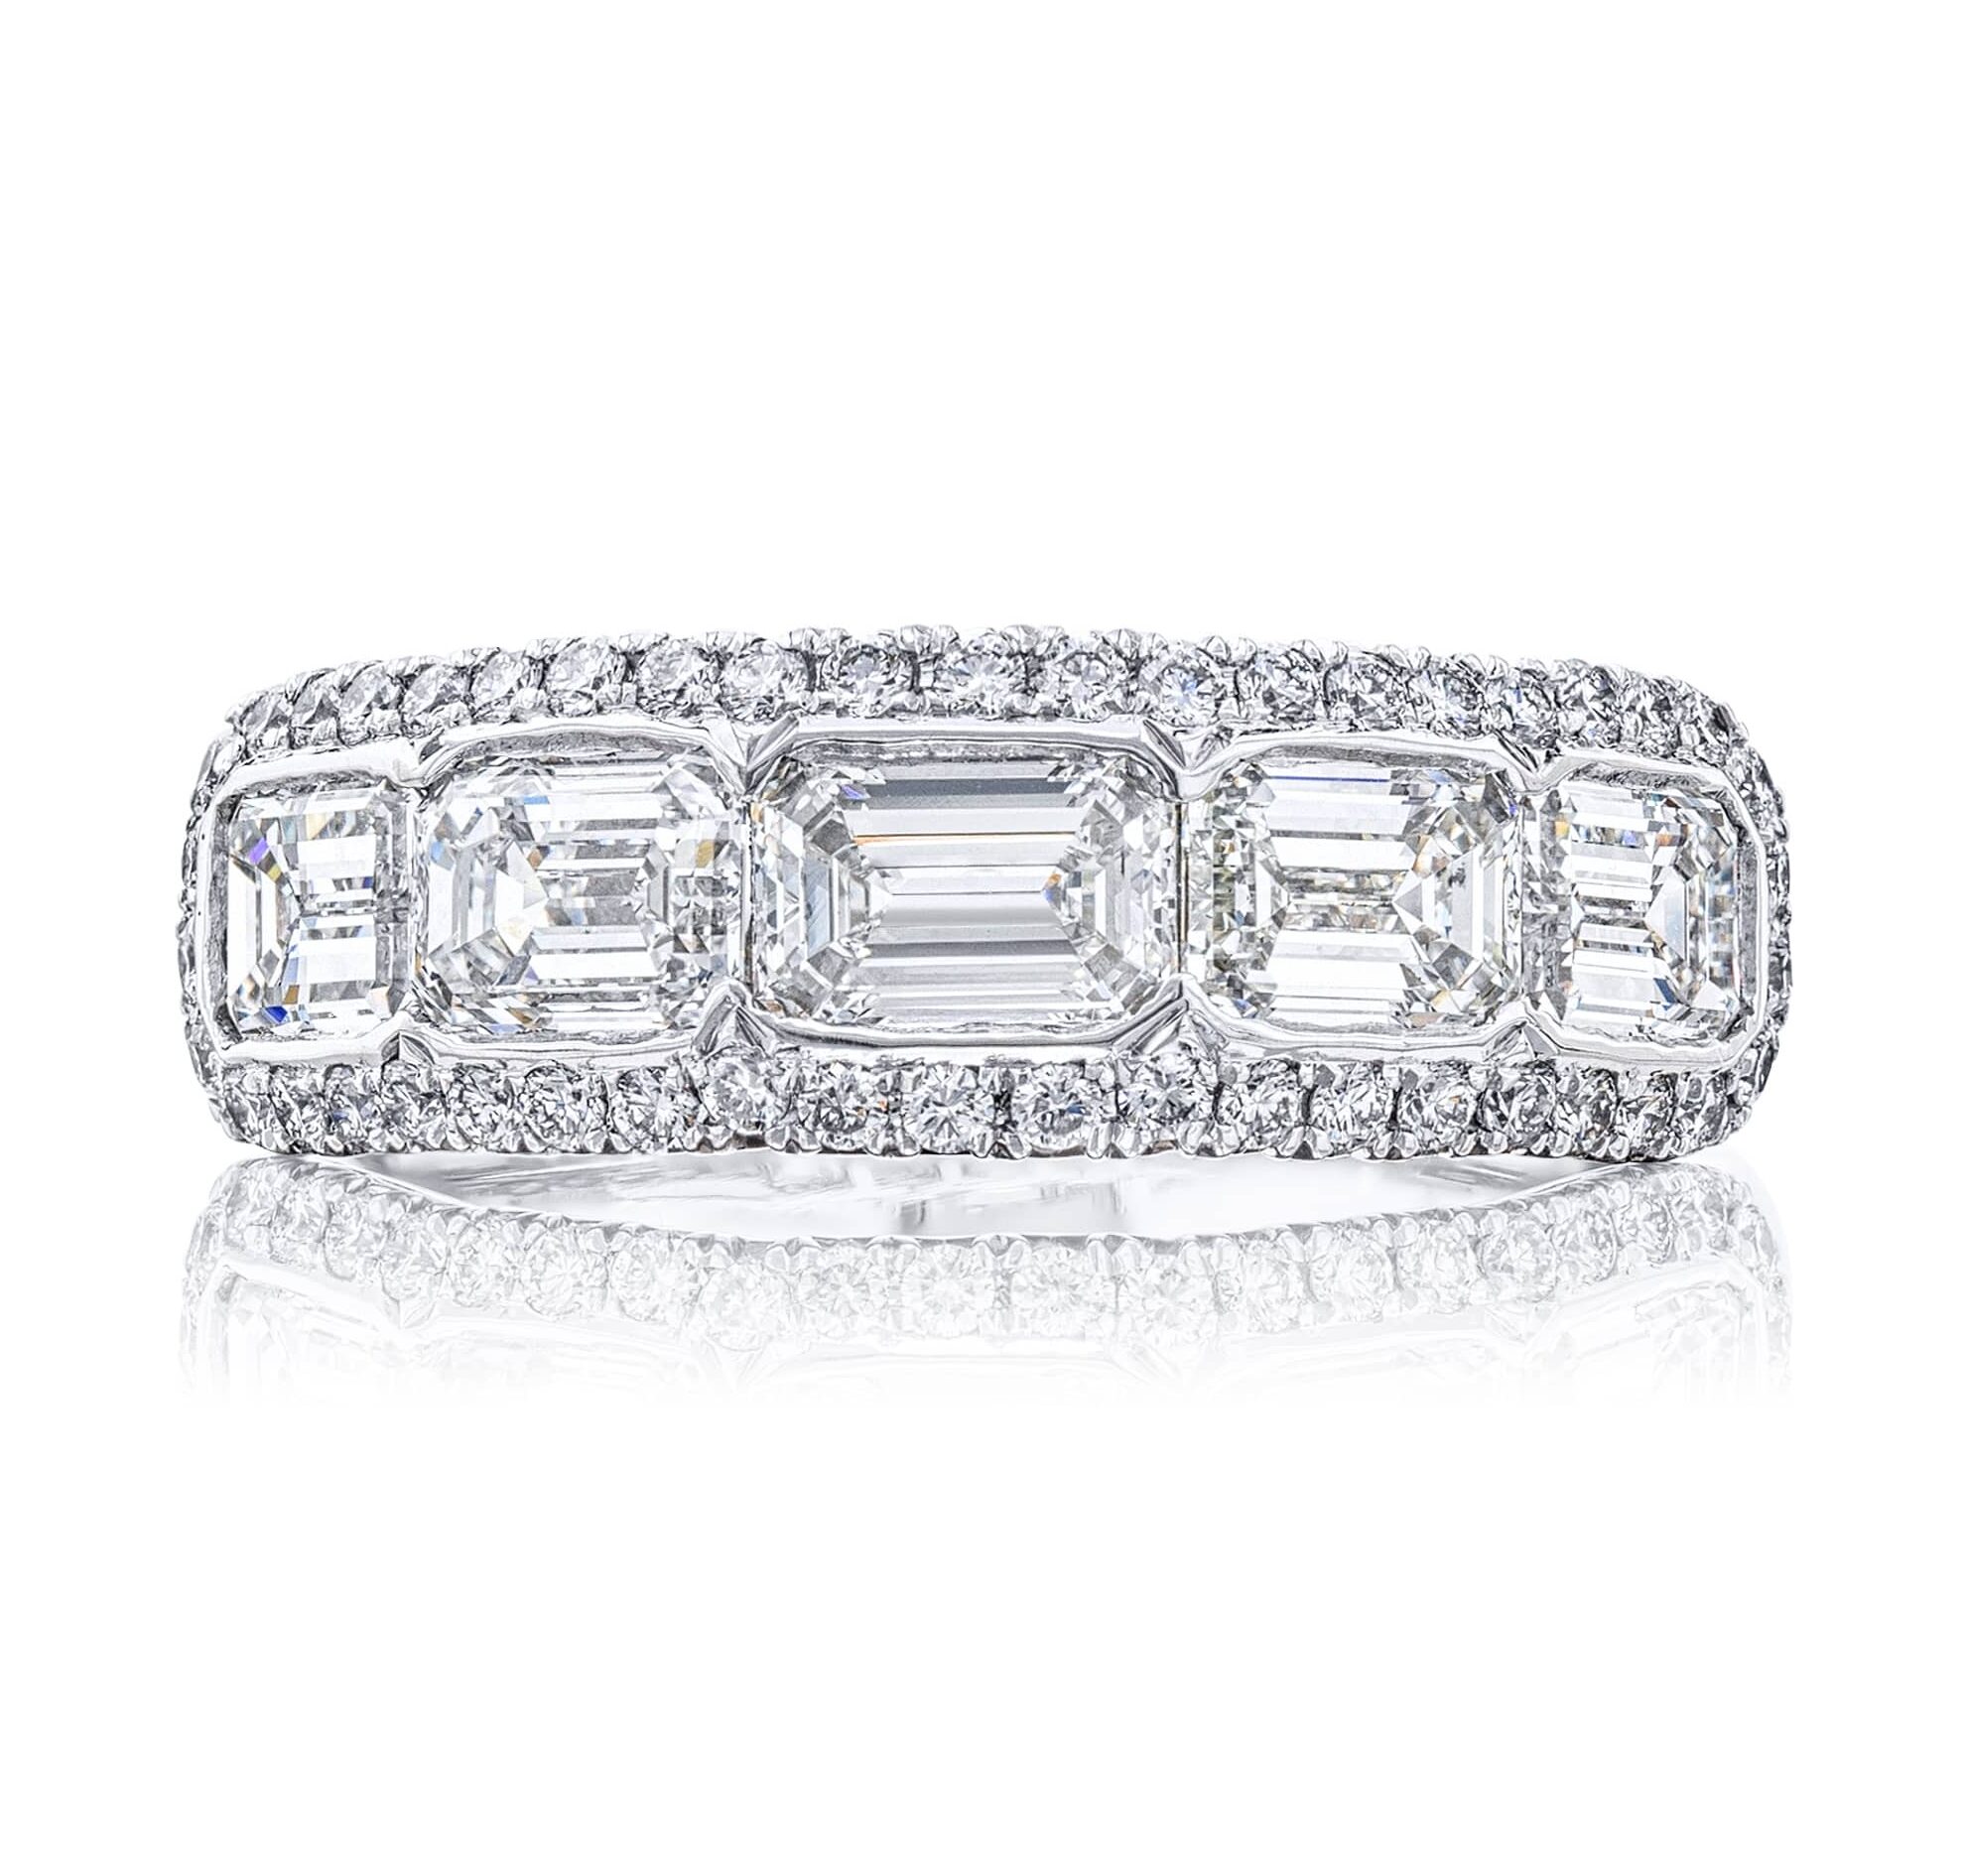 Emerald Cut Diamond and Platinum Ring